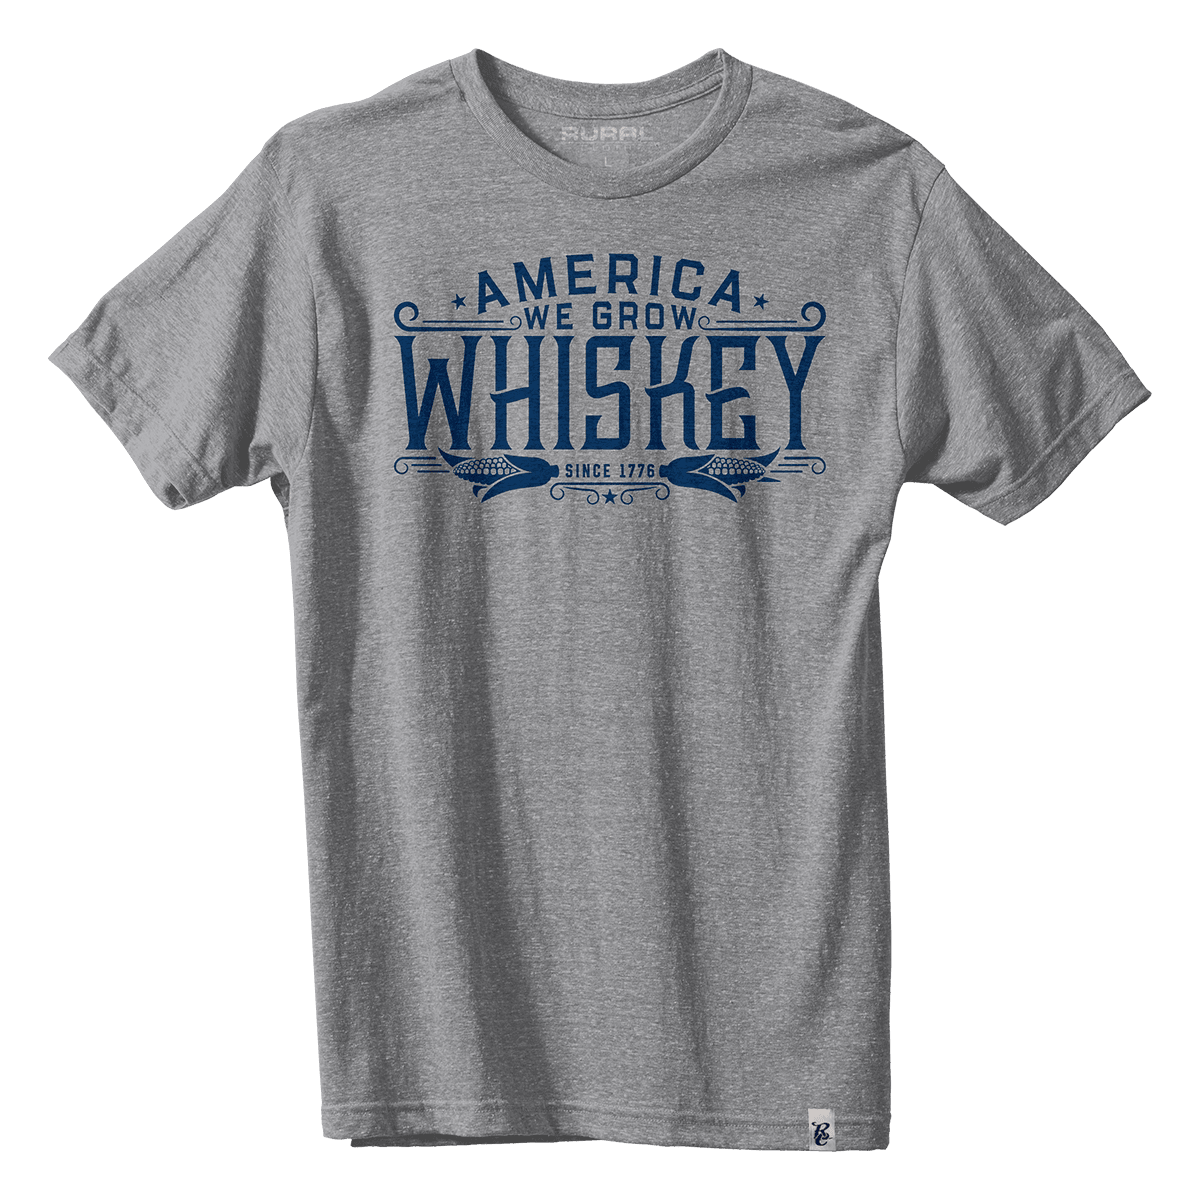 Rural Cloth Shirts America We Grow Whiskey Tee - Gray